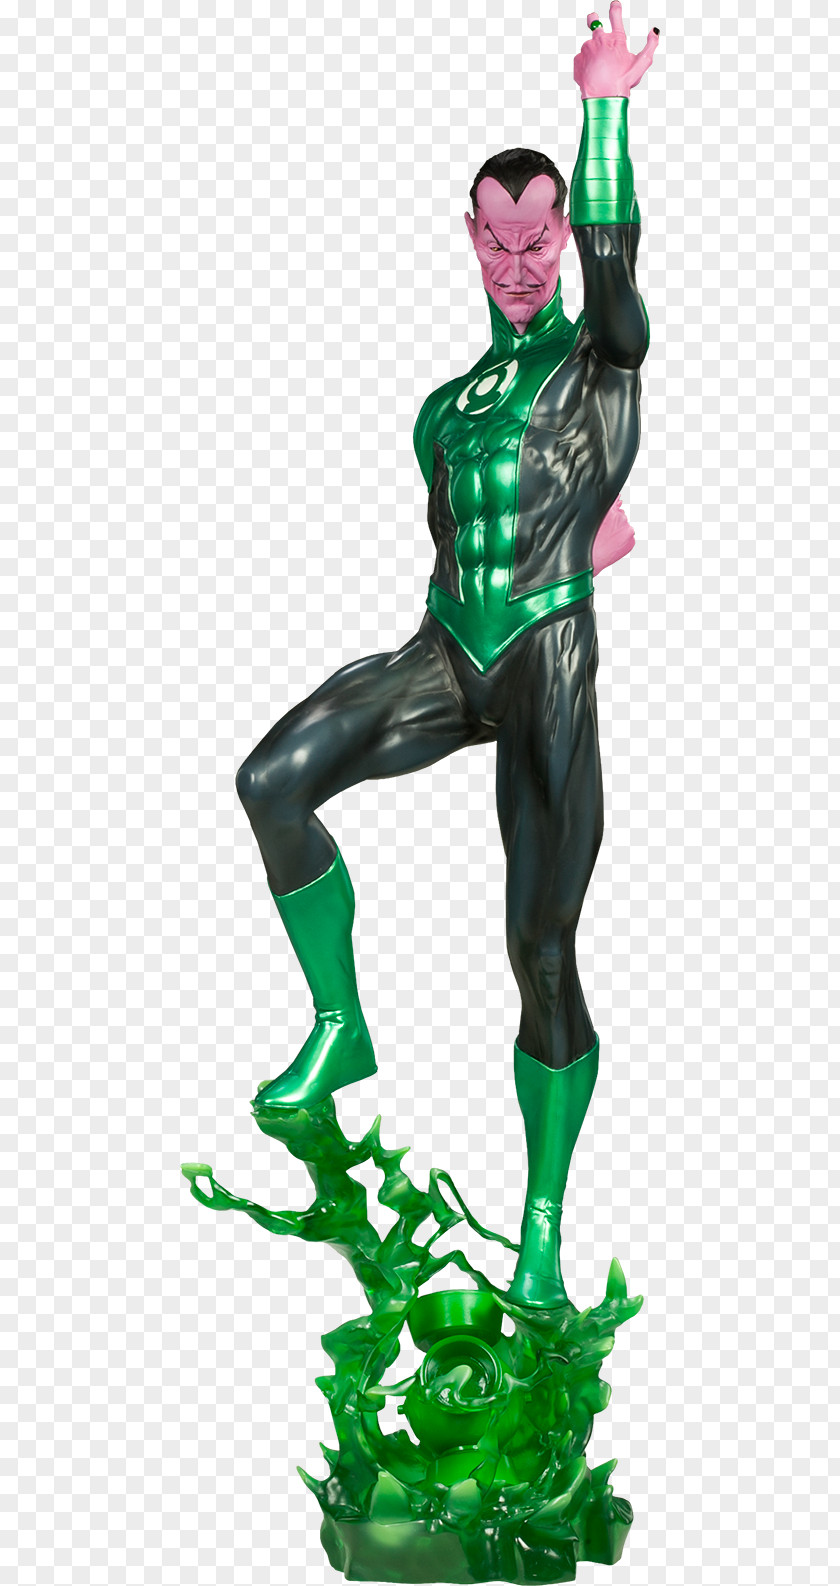 Dc Comics Sinestro Corps Green Lantern Superhero PNG